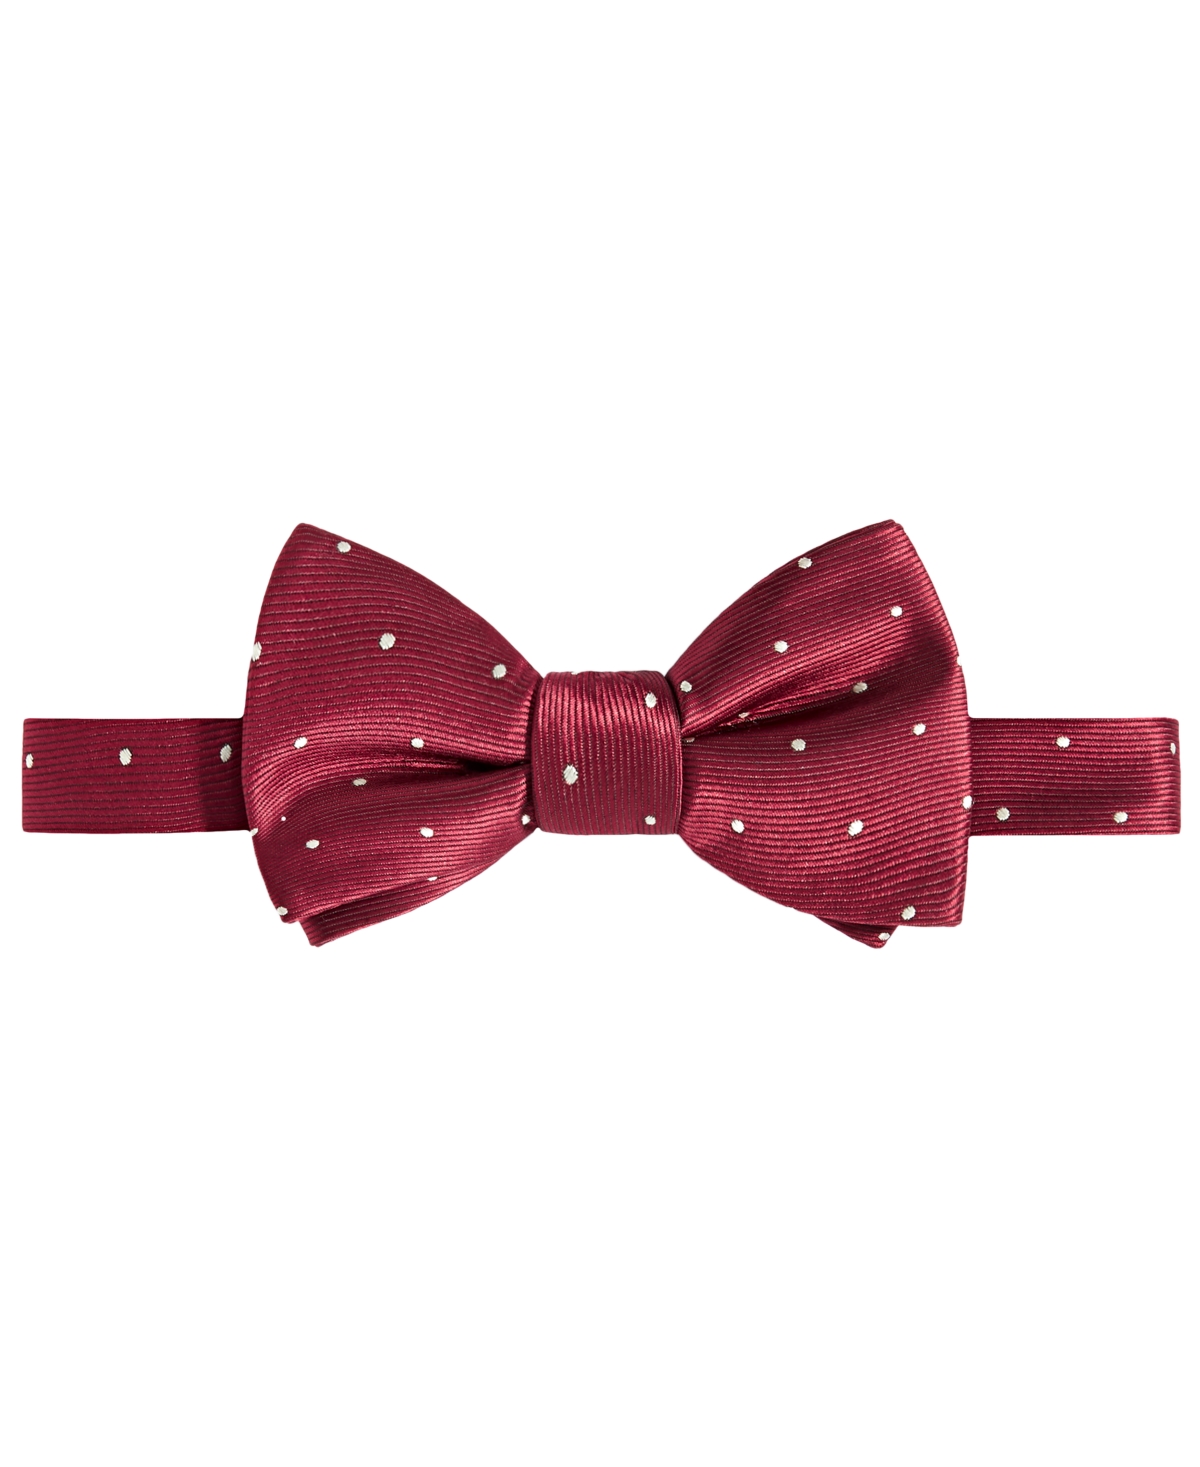 Men's Crimson & Cream Dot Bow Tie - Red